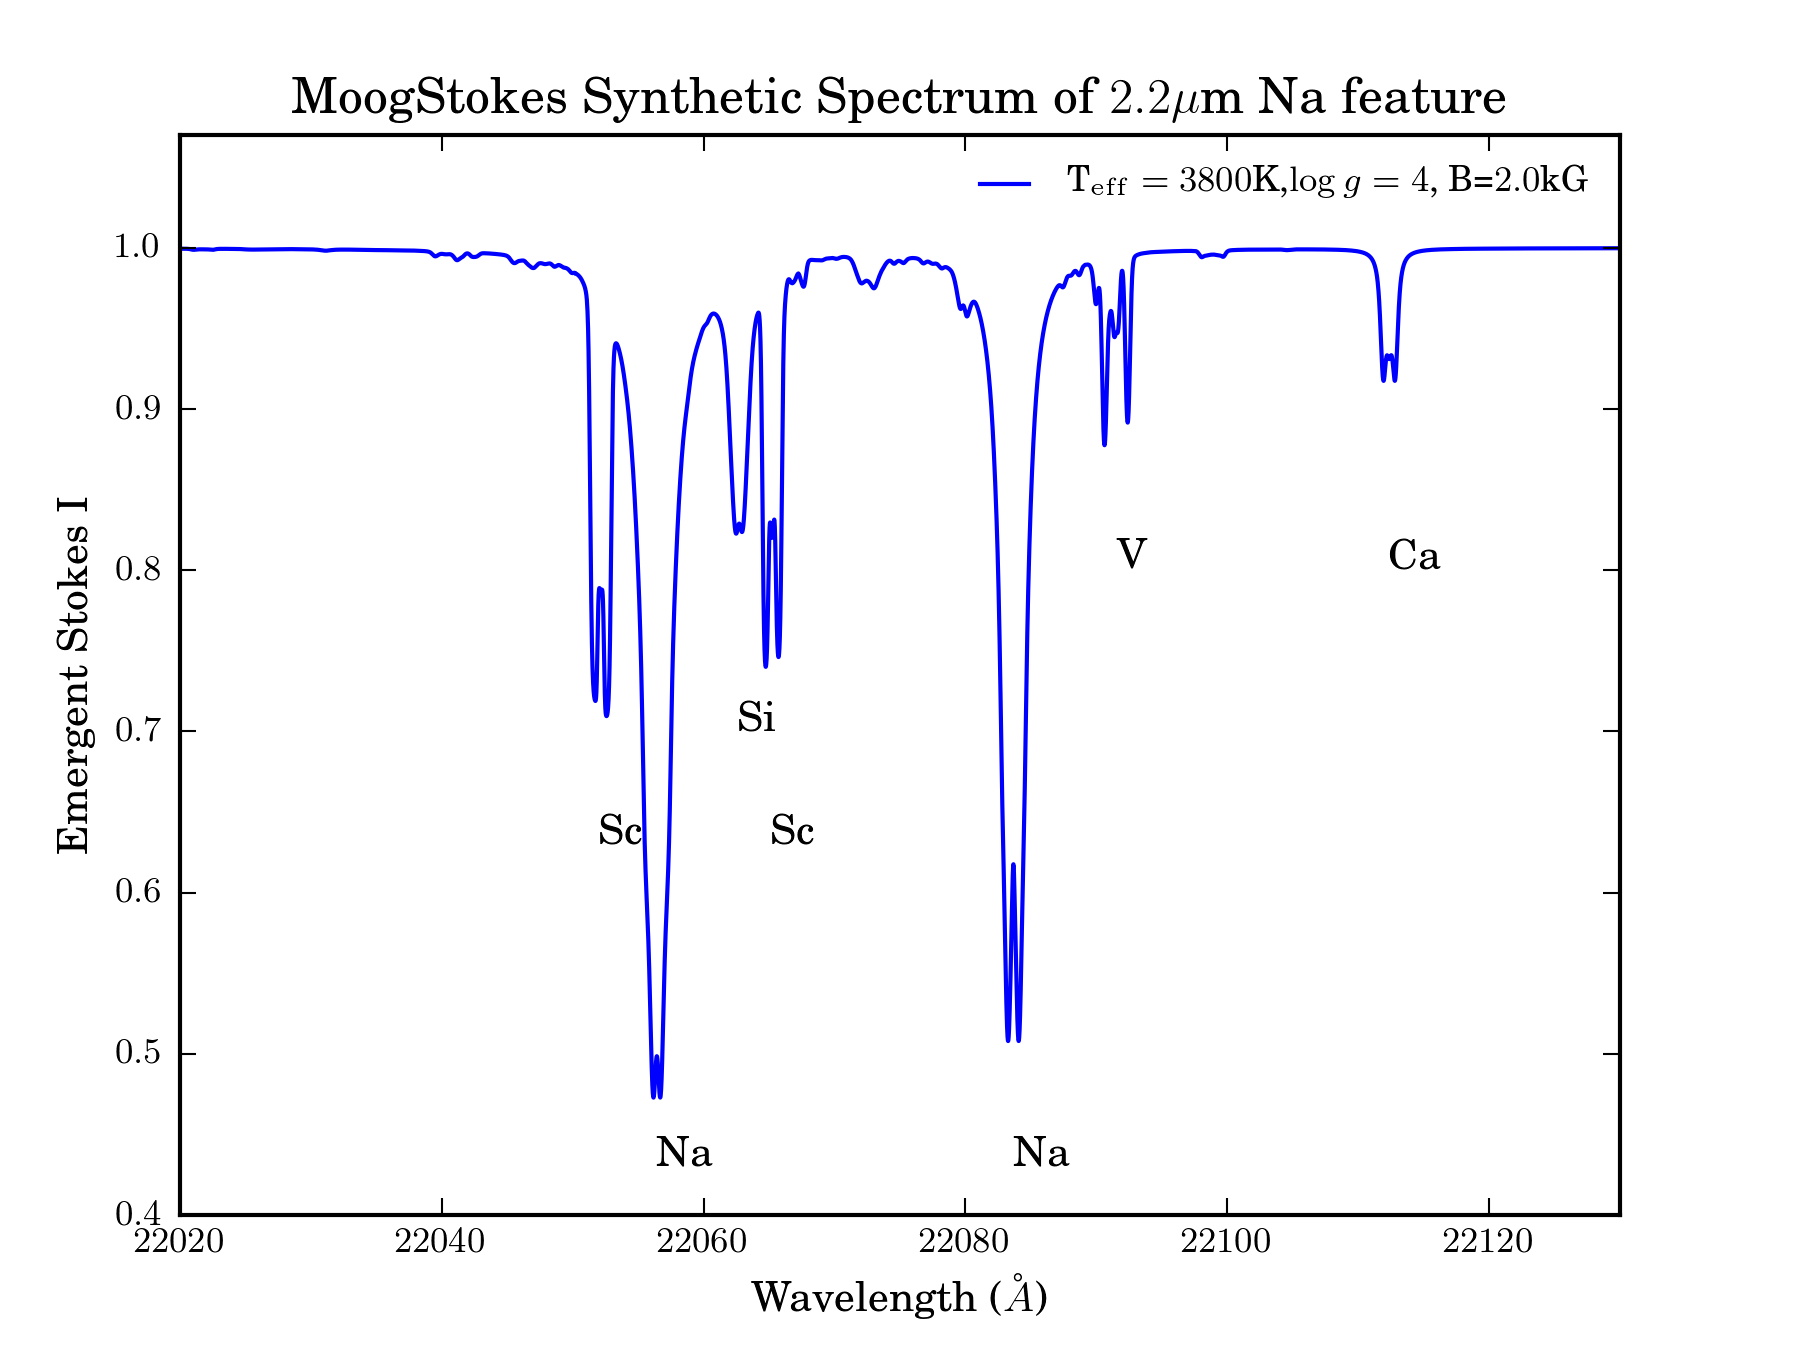 B=2.0kG, MoogStokes Synthetic Spectrum